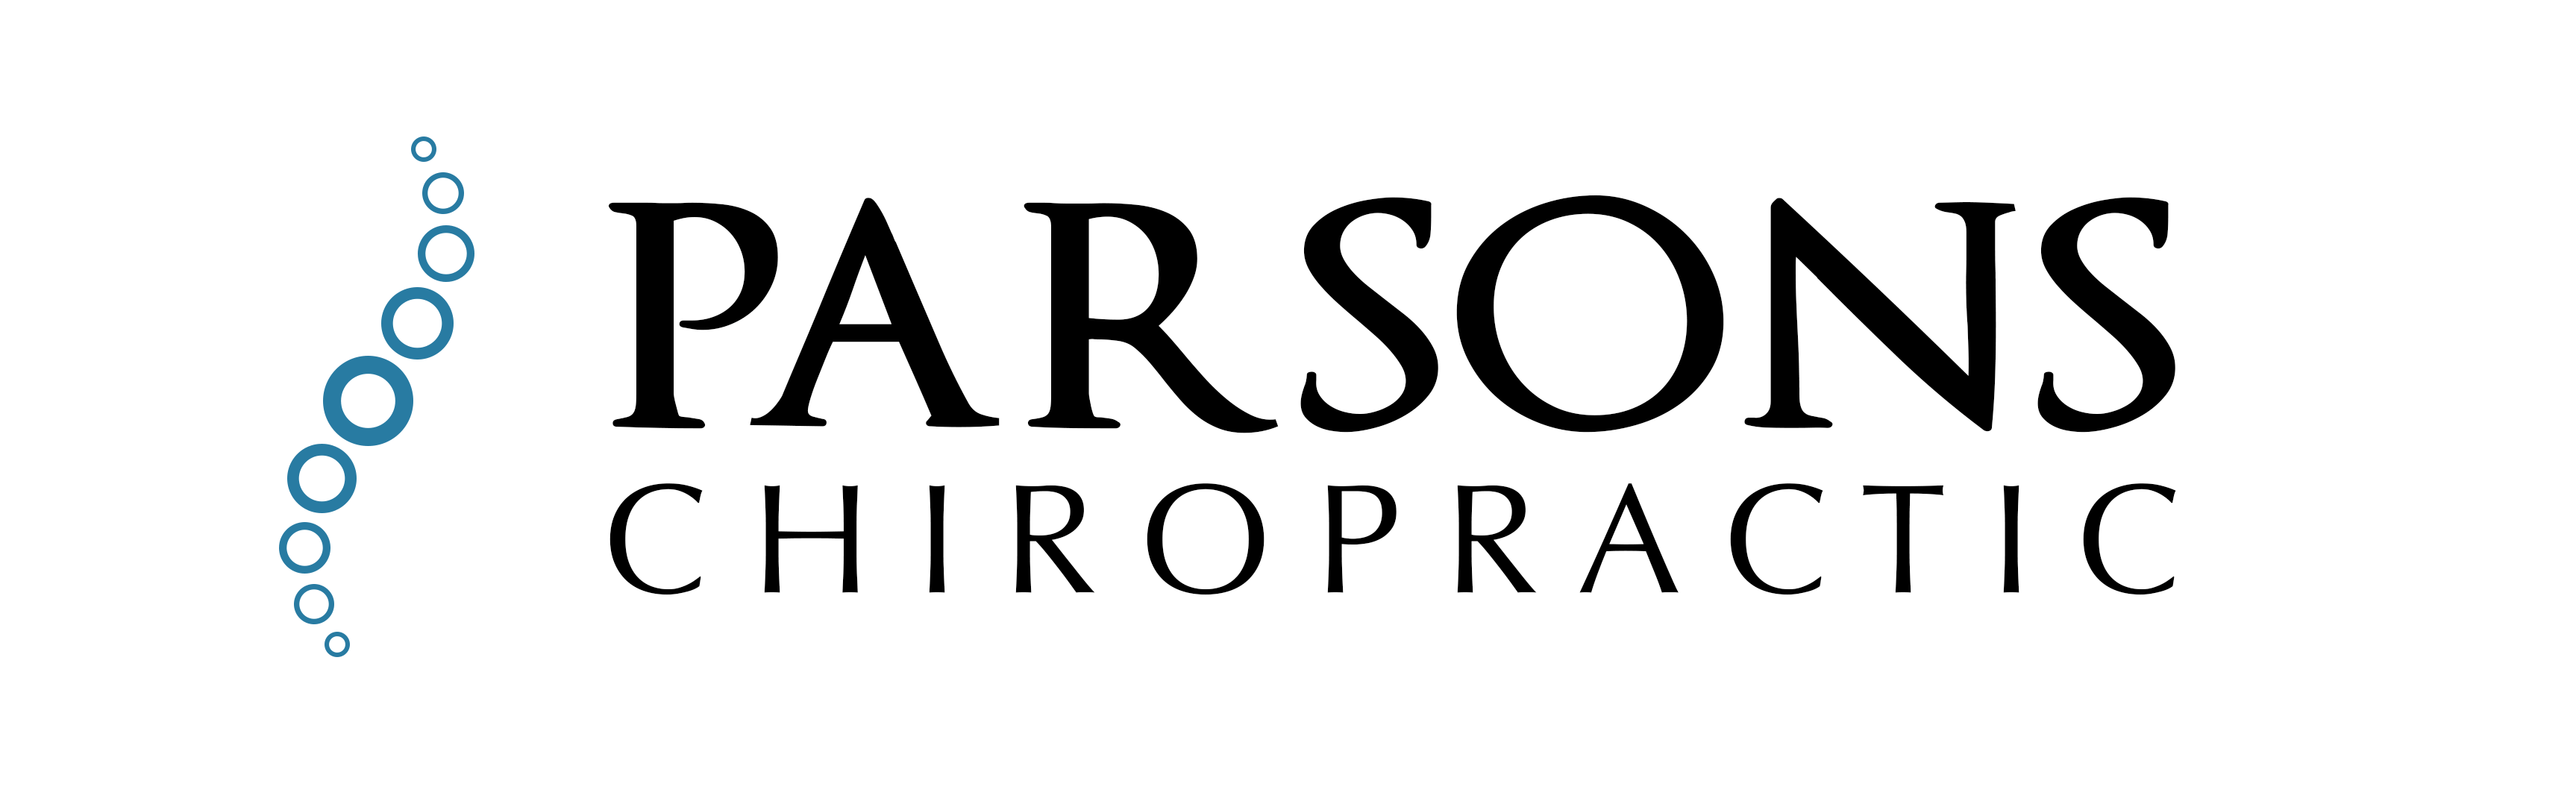 Parsons Chiropractic